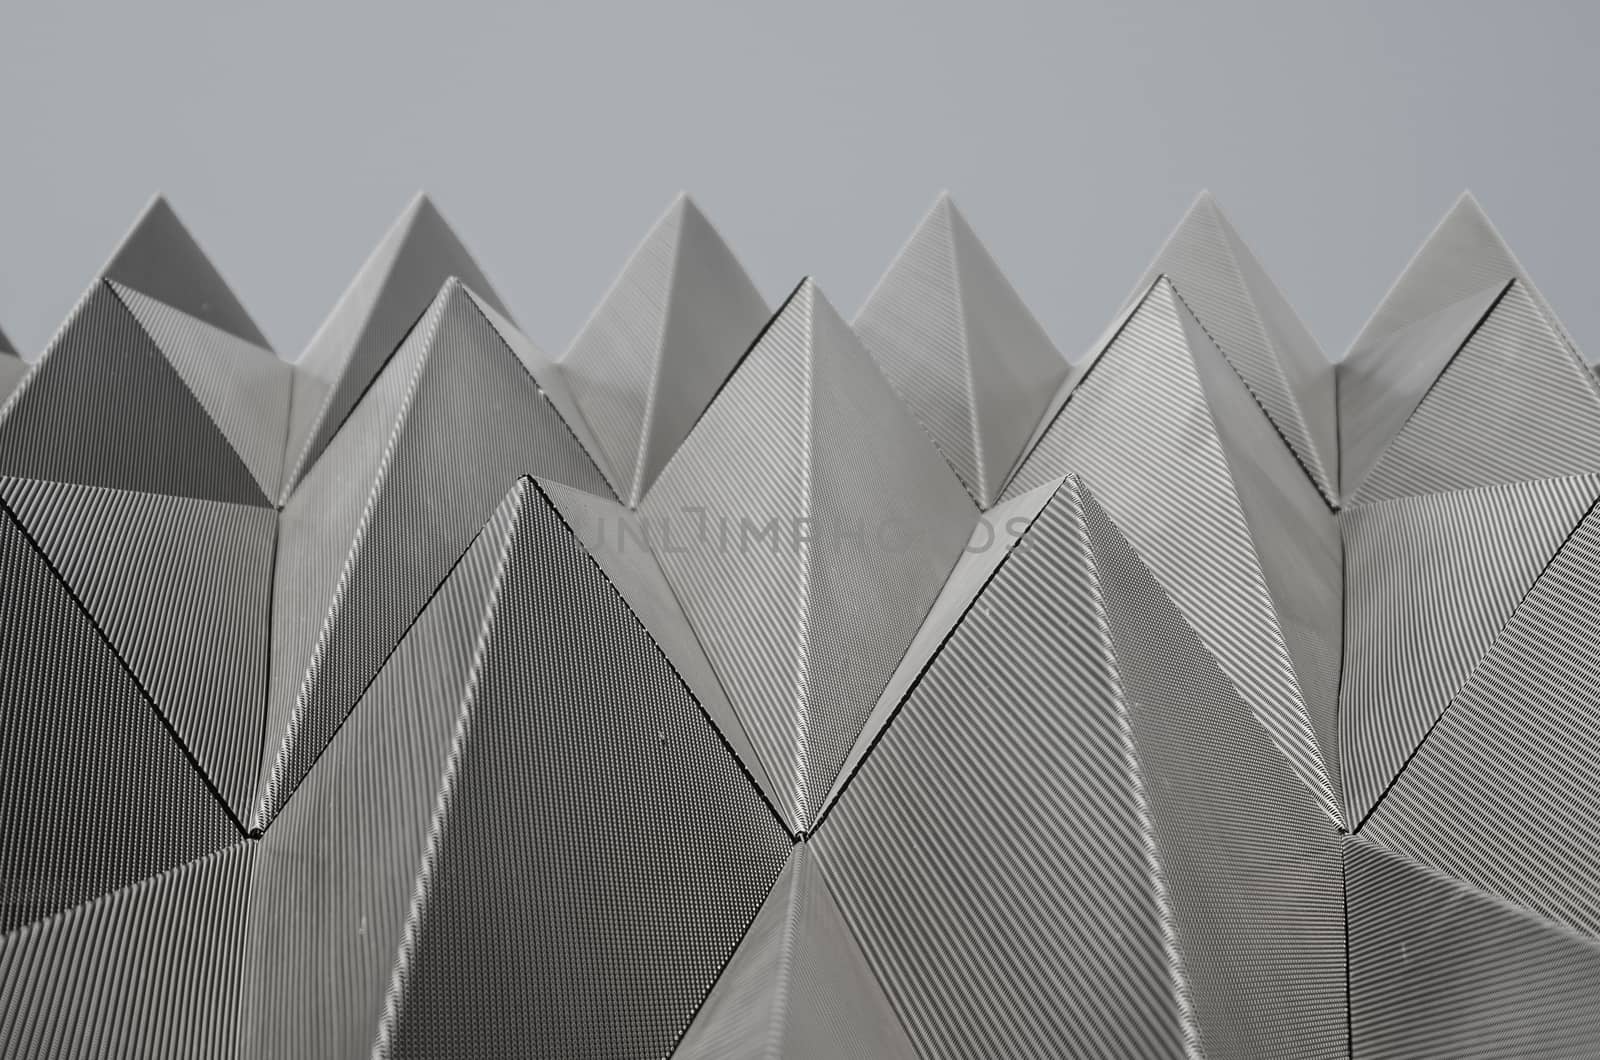 Metallic piramids make the faces of the Navarrabiomed building near the hospital of Pamplona, Navarra, Spain